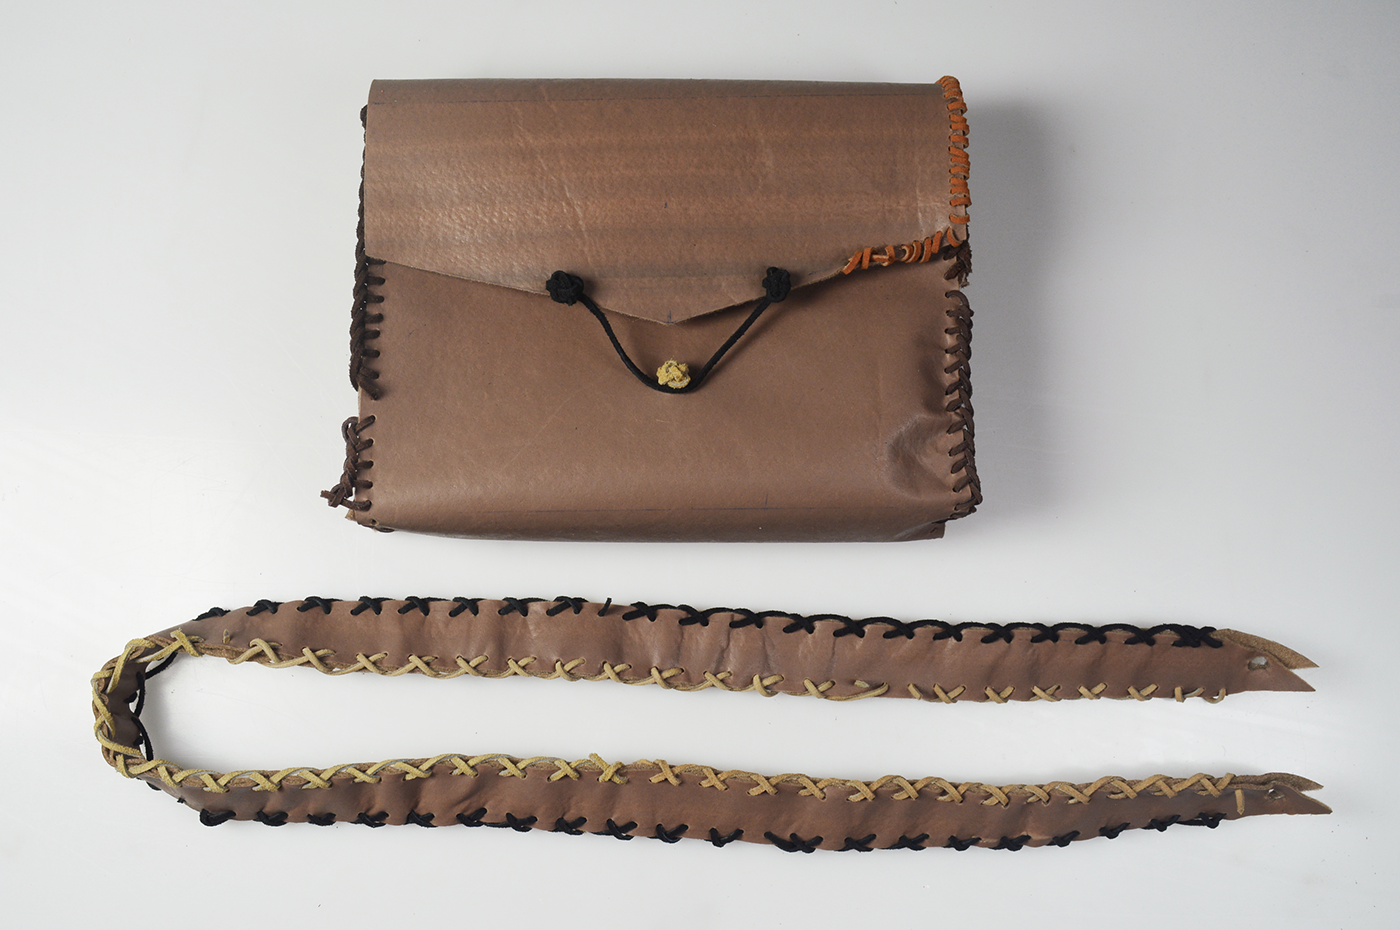 bag book leather purse satchel sewing Fashion  string stitching bag design